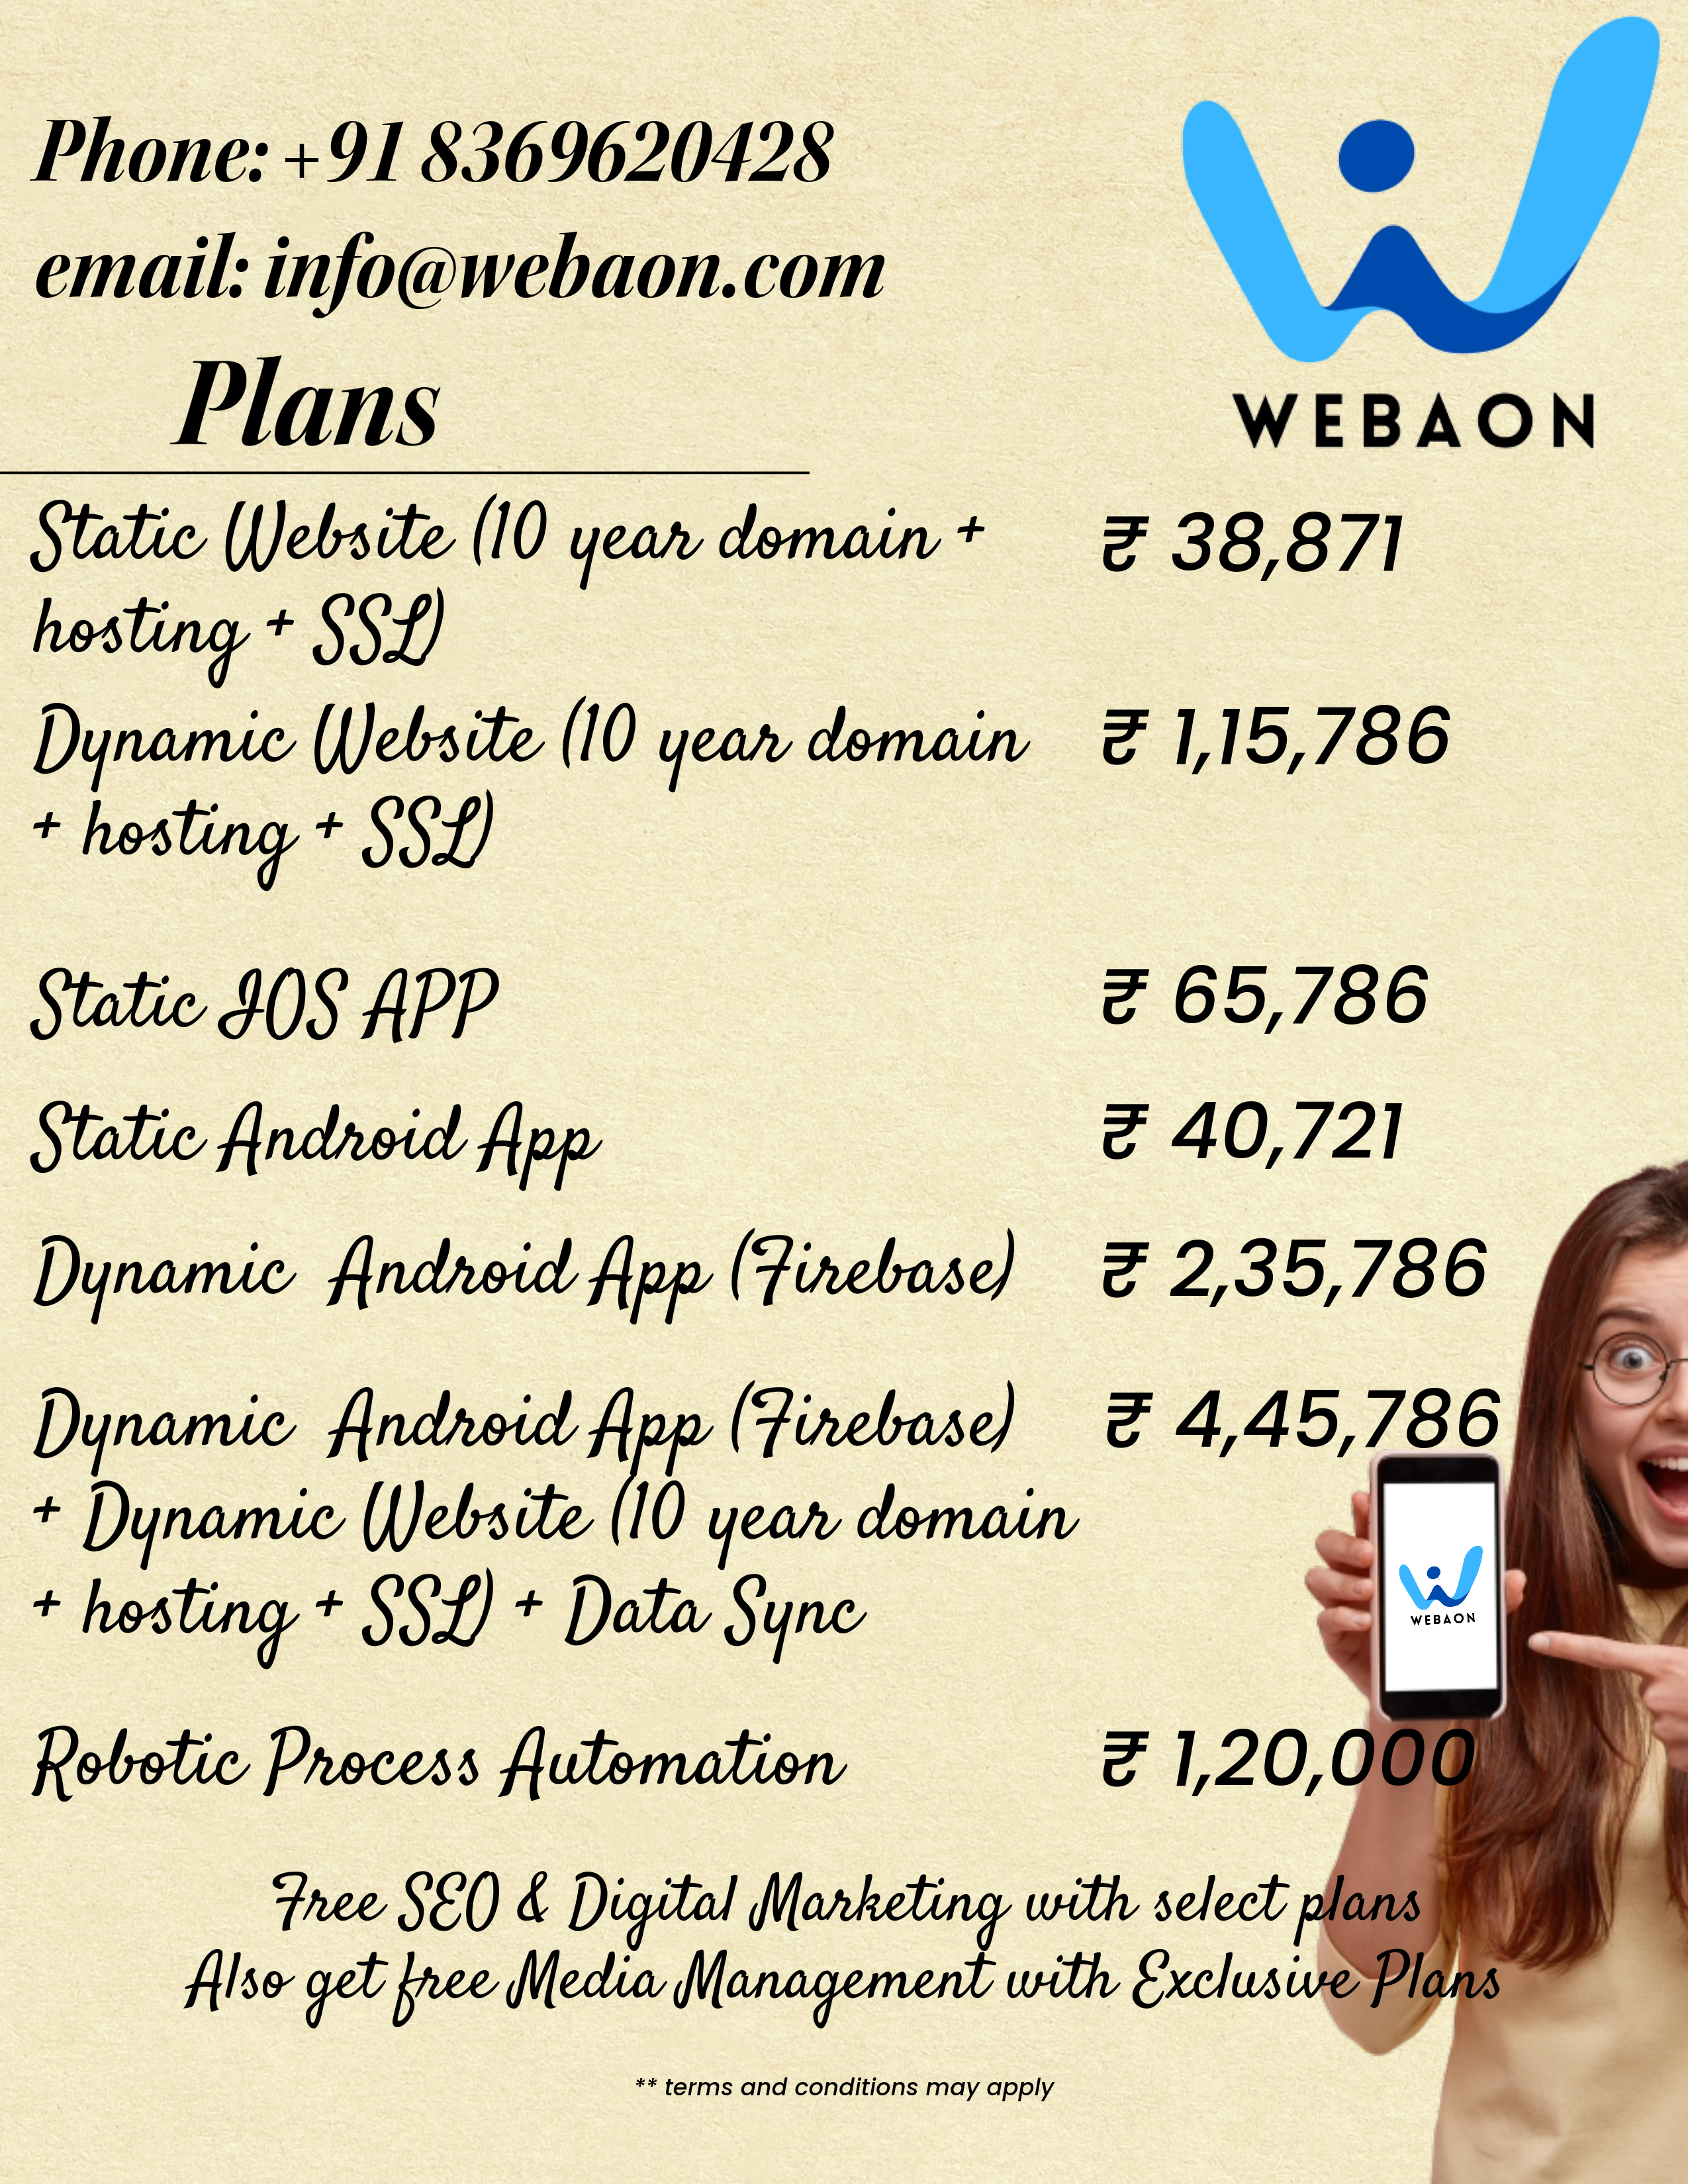 Plans Webaon